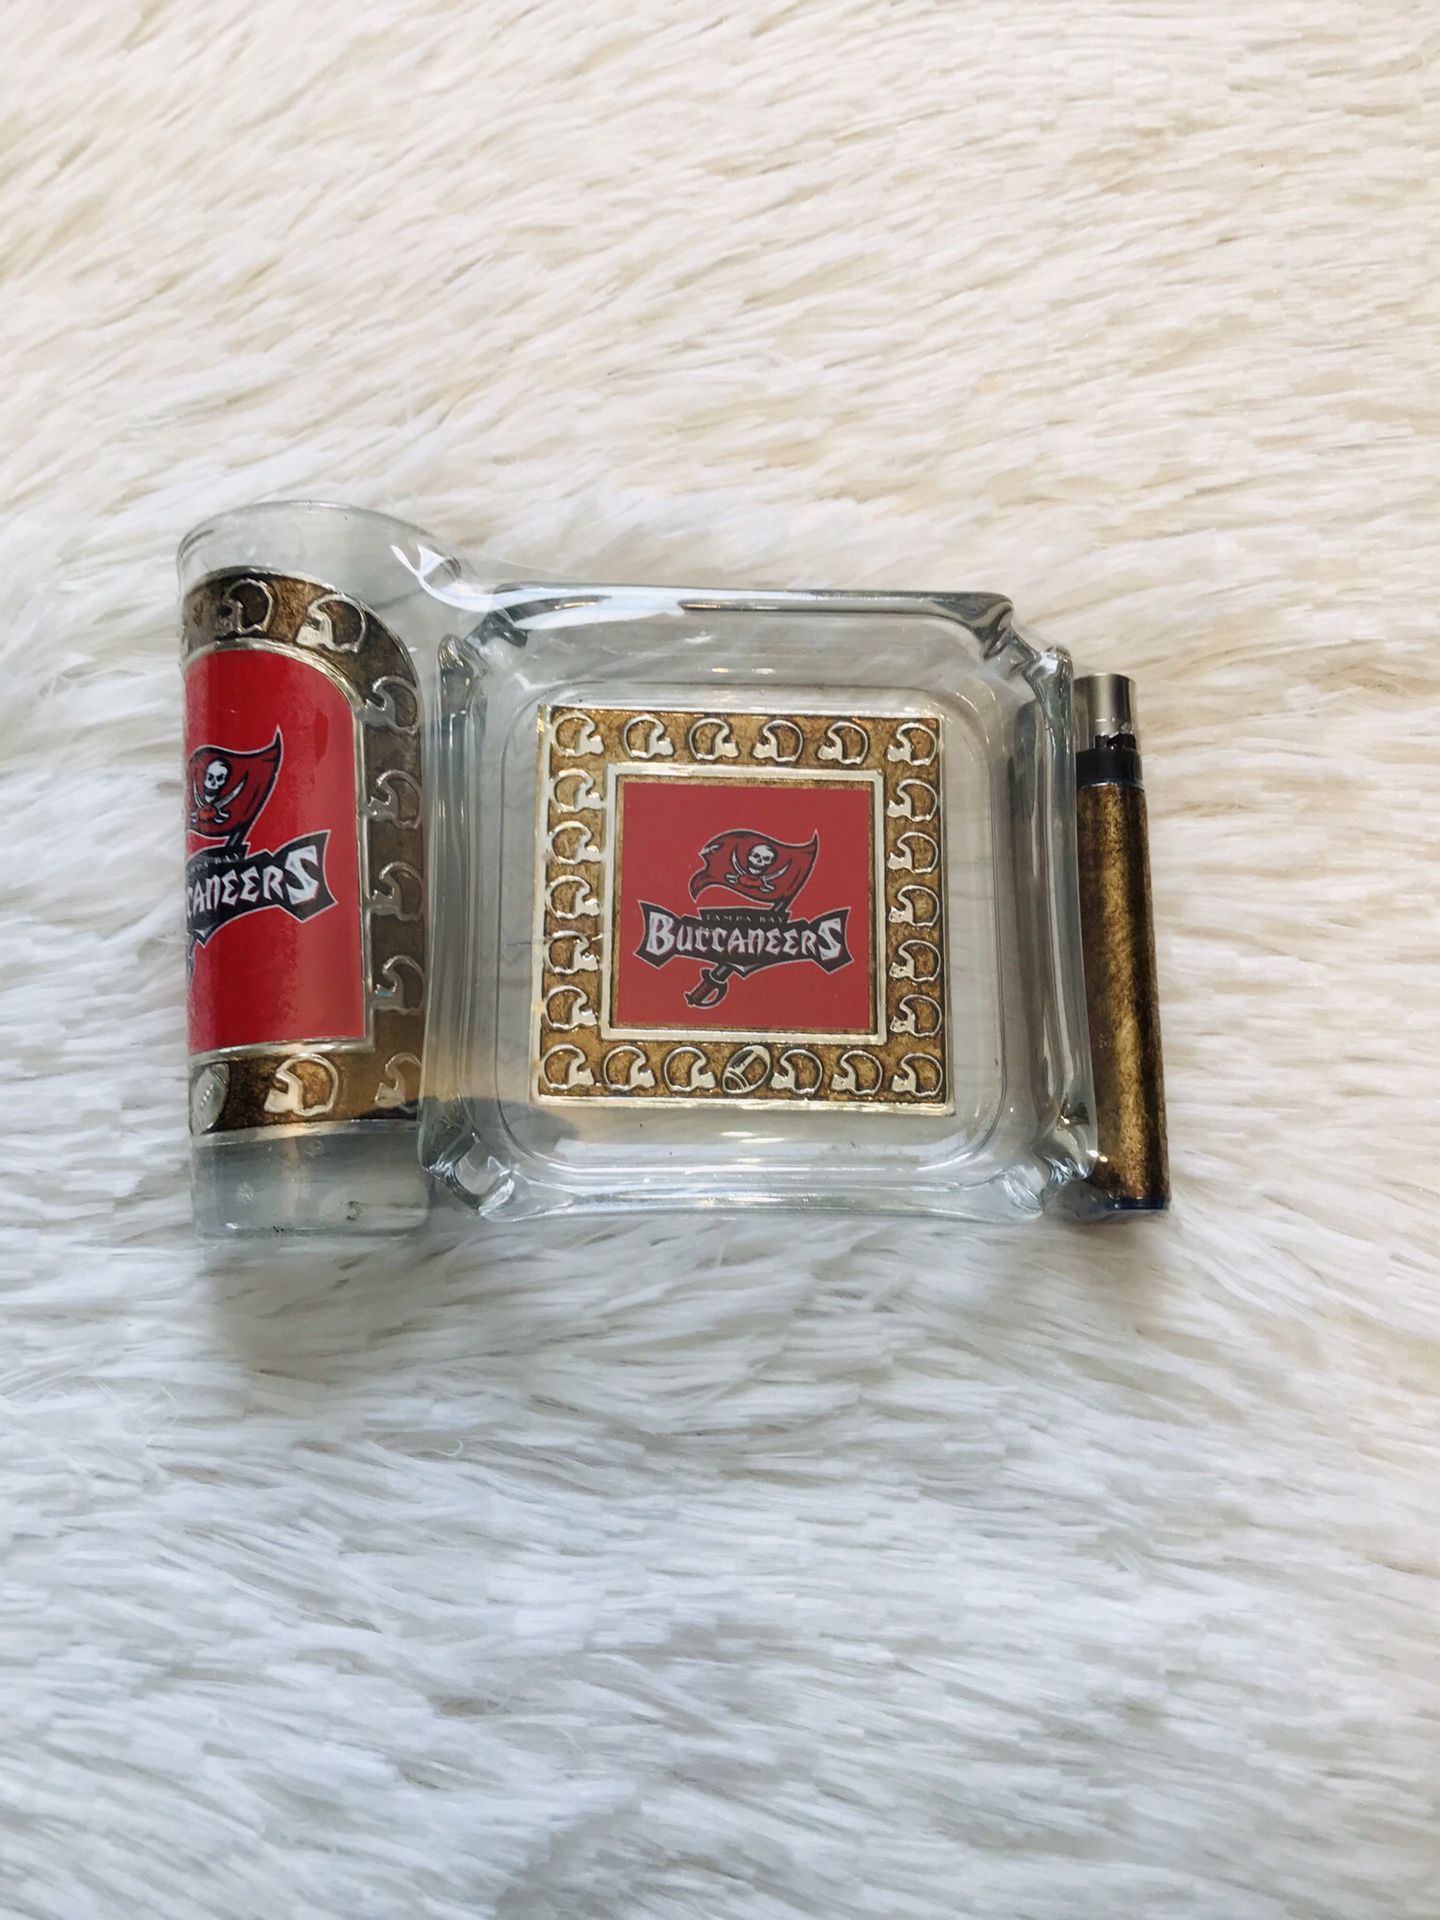 Tampa Bay Buccaneers ashtray set